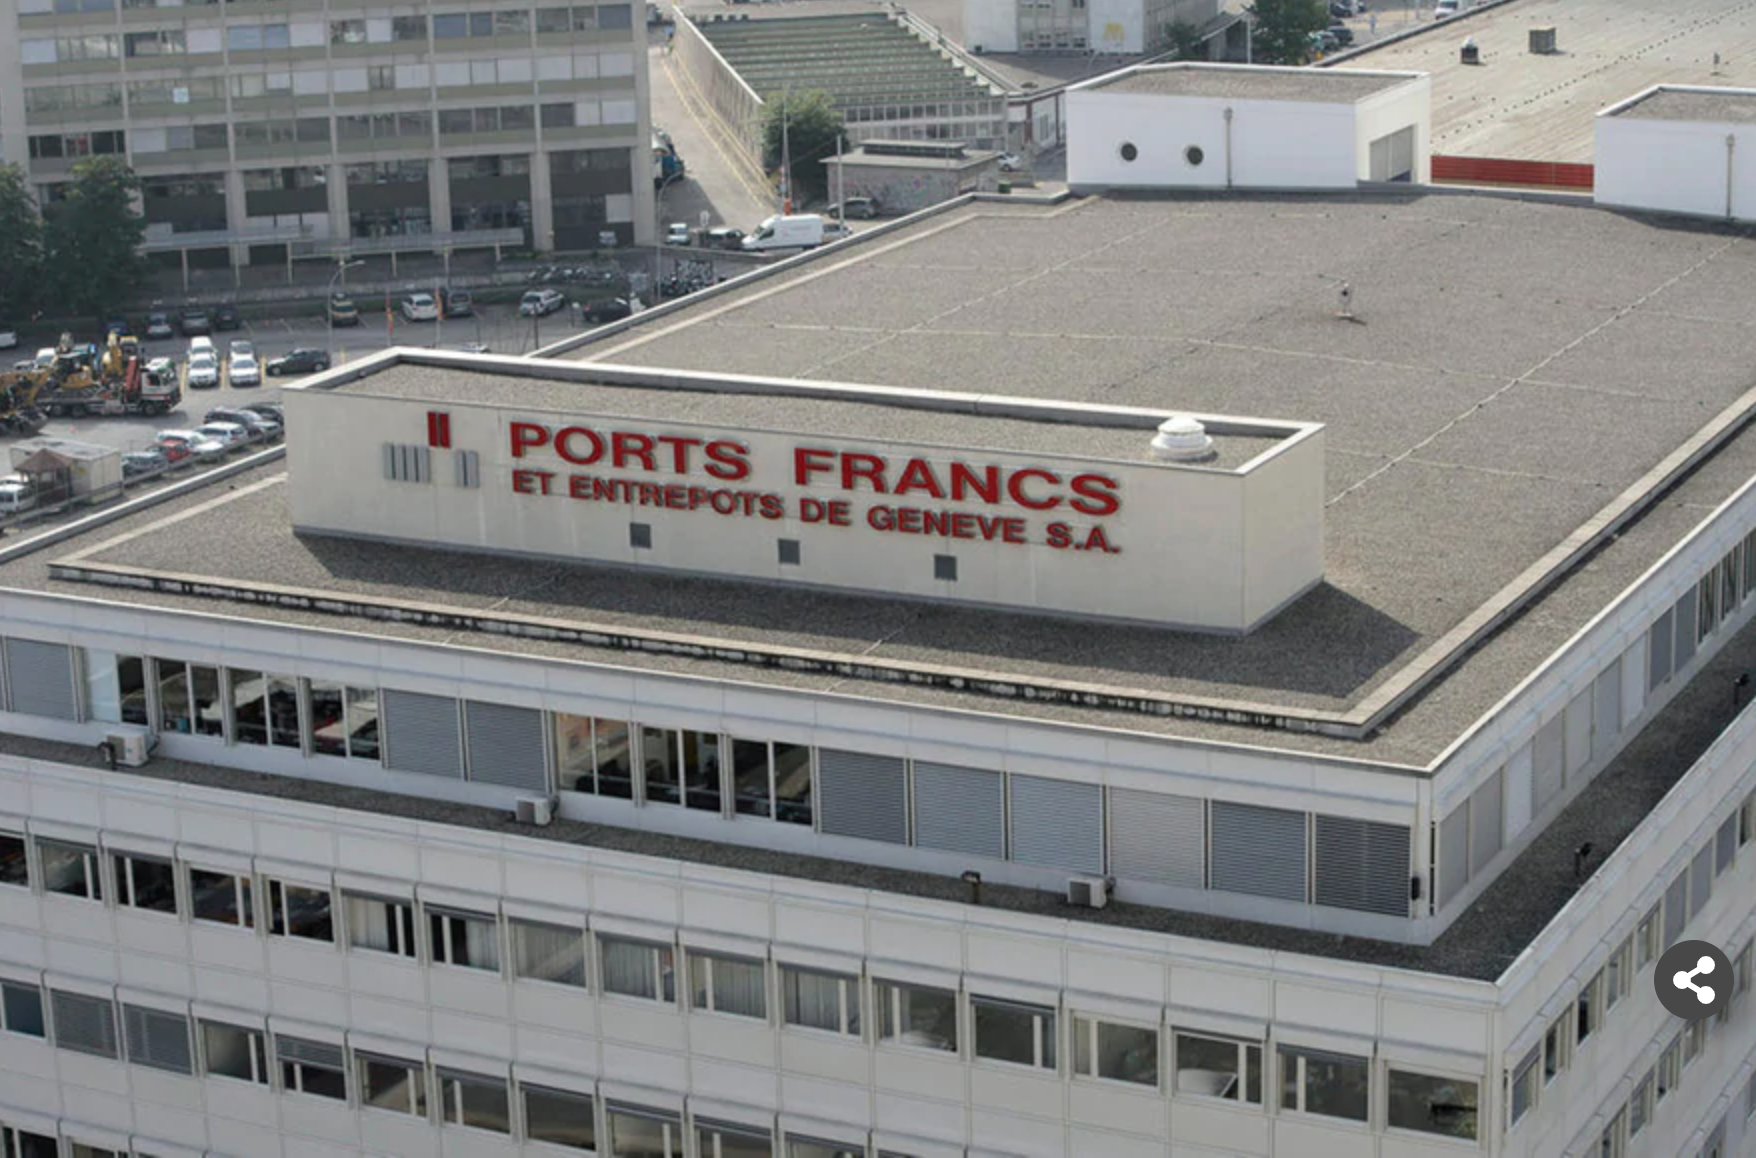 Ports France, part of the Geneva Freeport in Switzerland